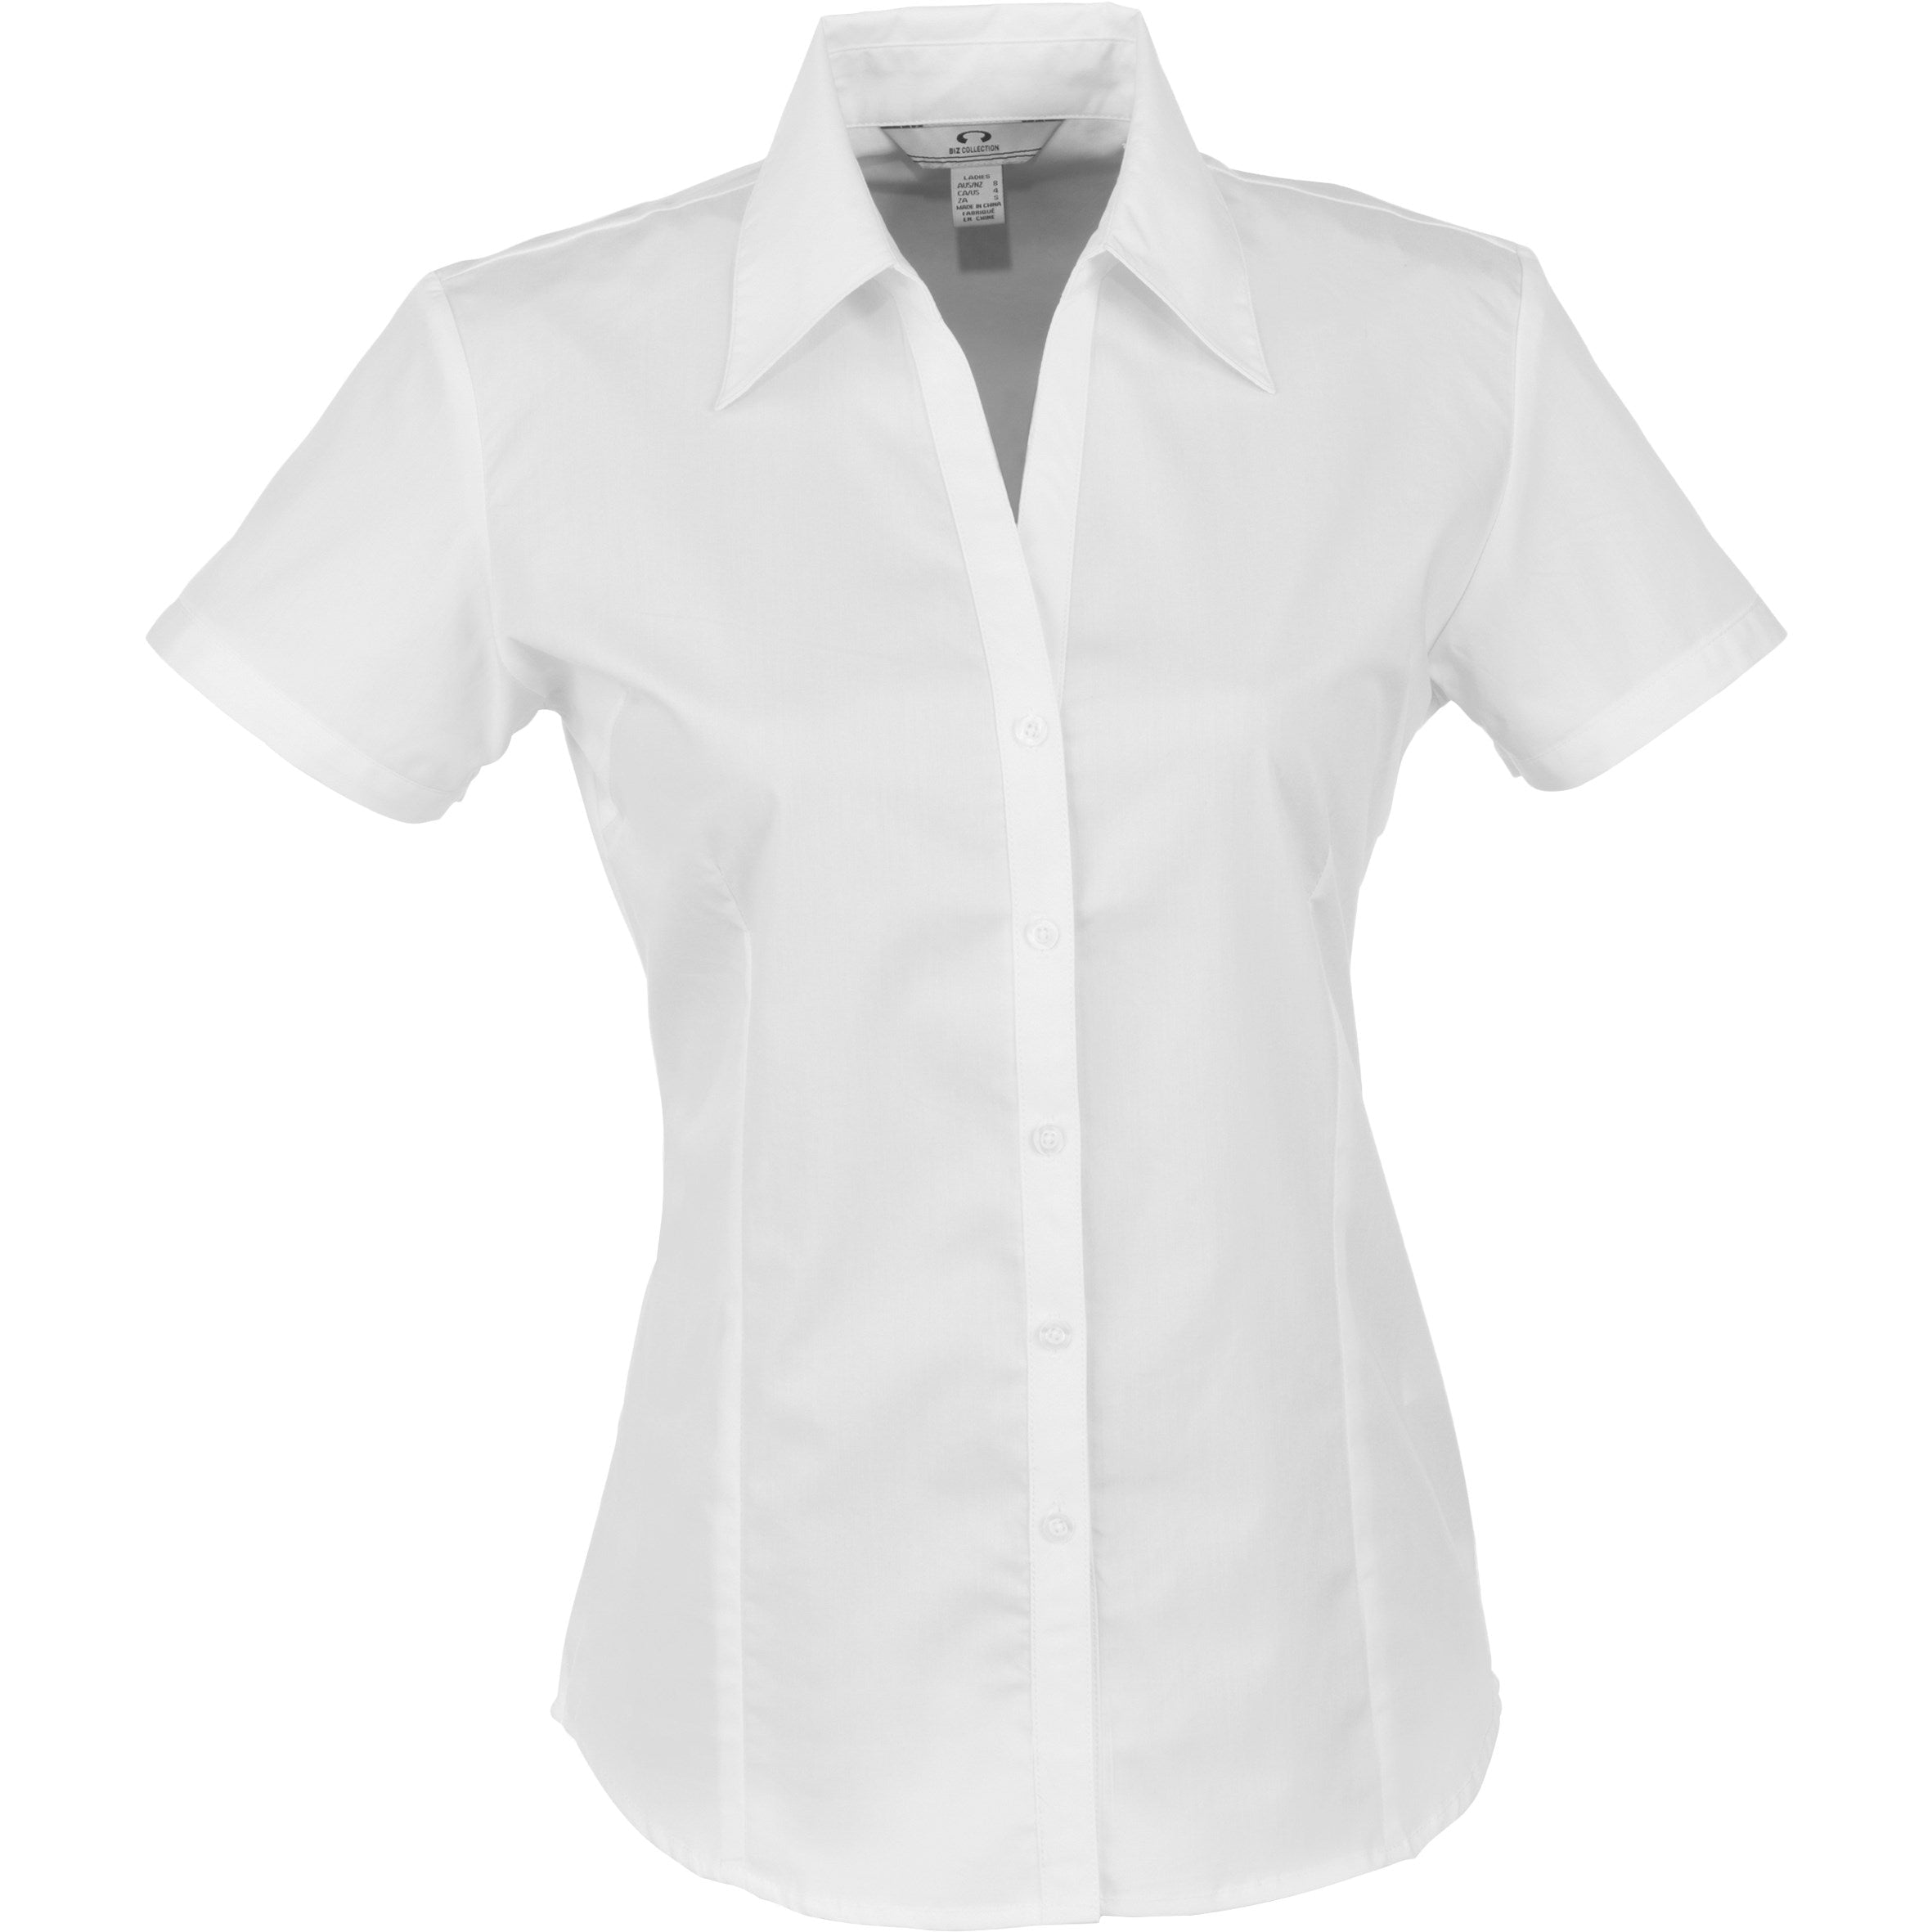 Ladies Short Sleeve Metro Shirt - Black Only-2XL-White-W